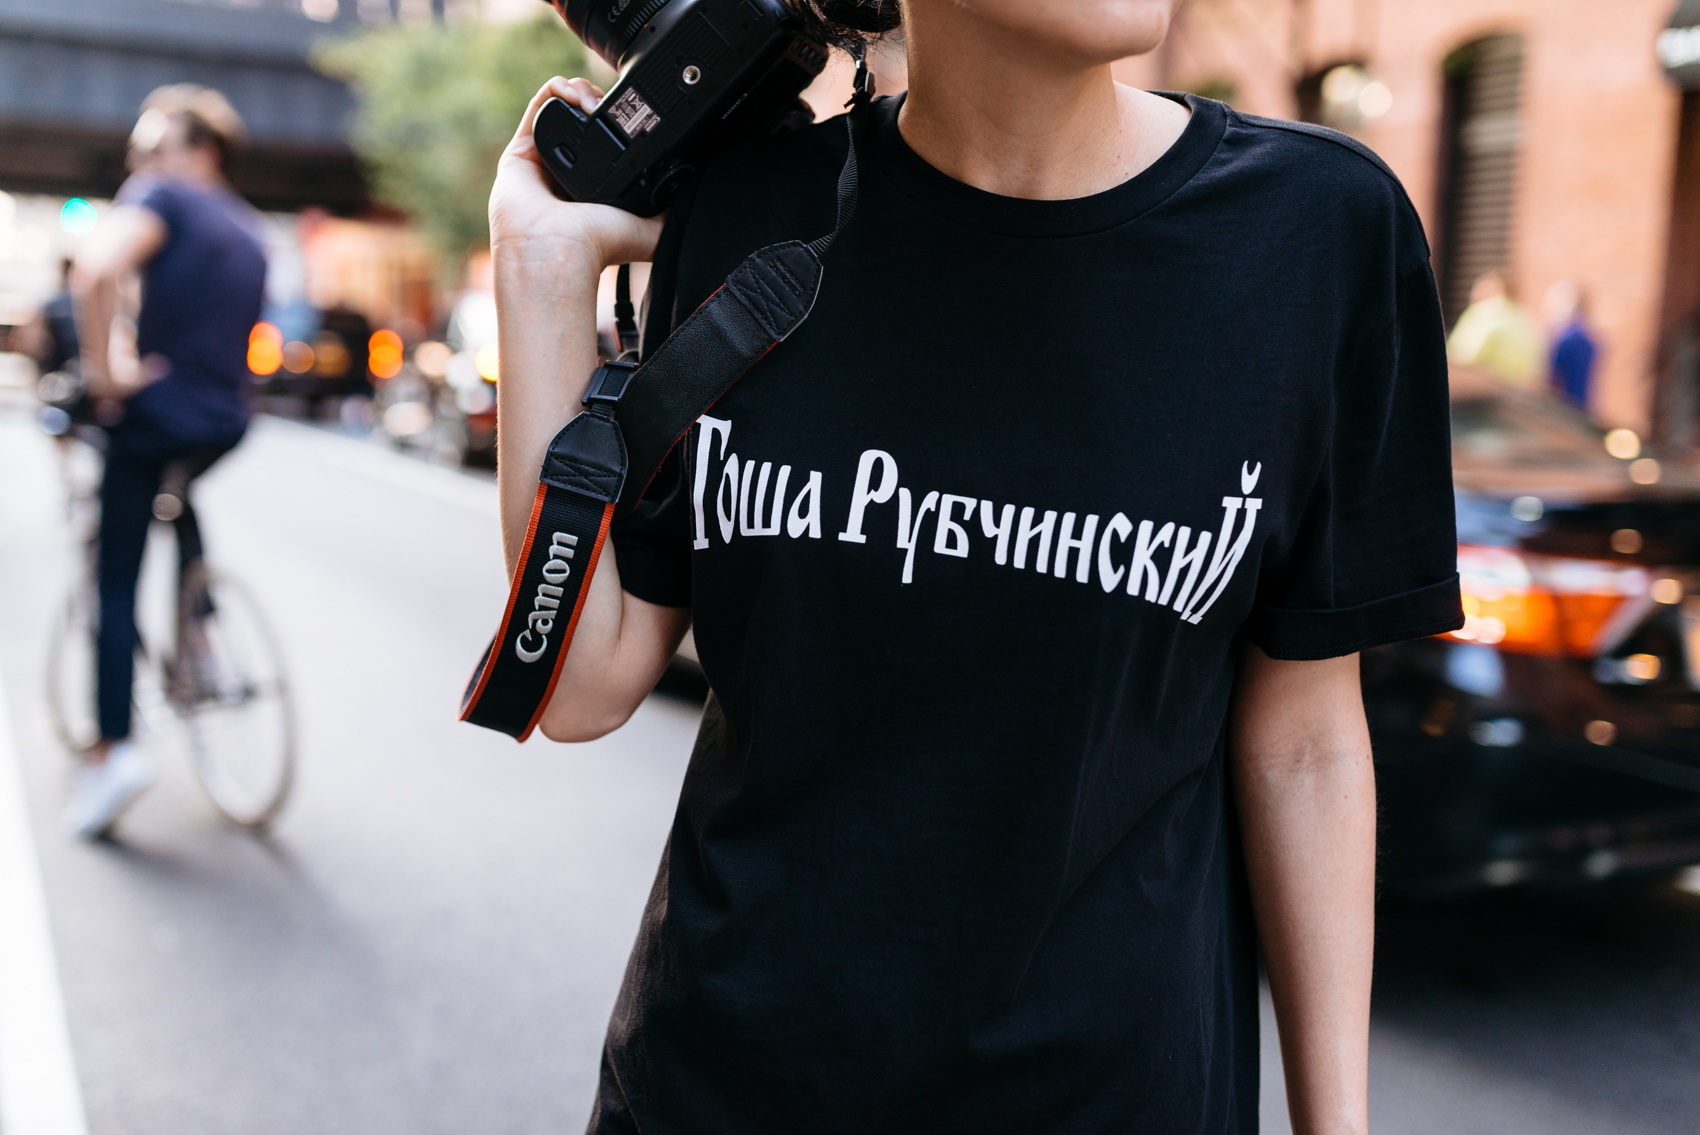 street style photographer wearing gosha rubchinskiy at NYFW